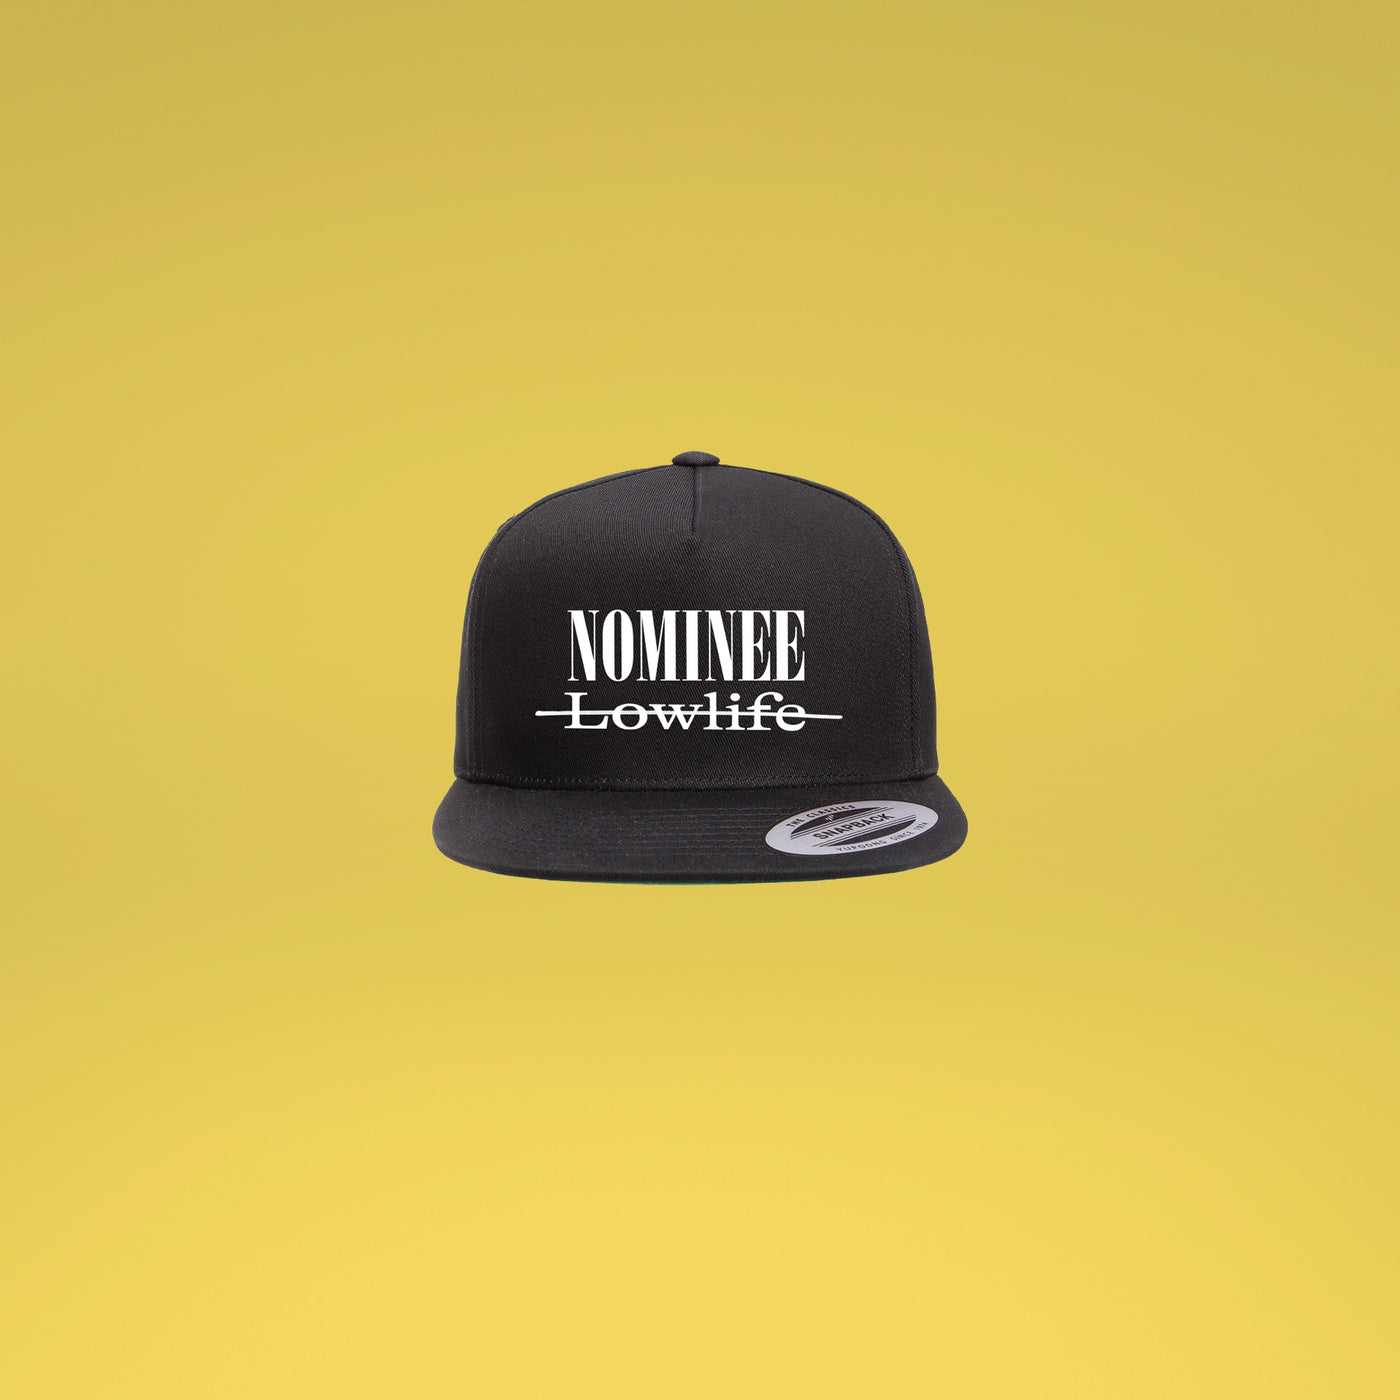 Nominee - Lowlife Snapback Hat